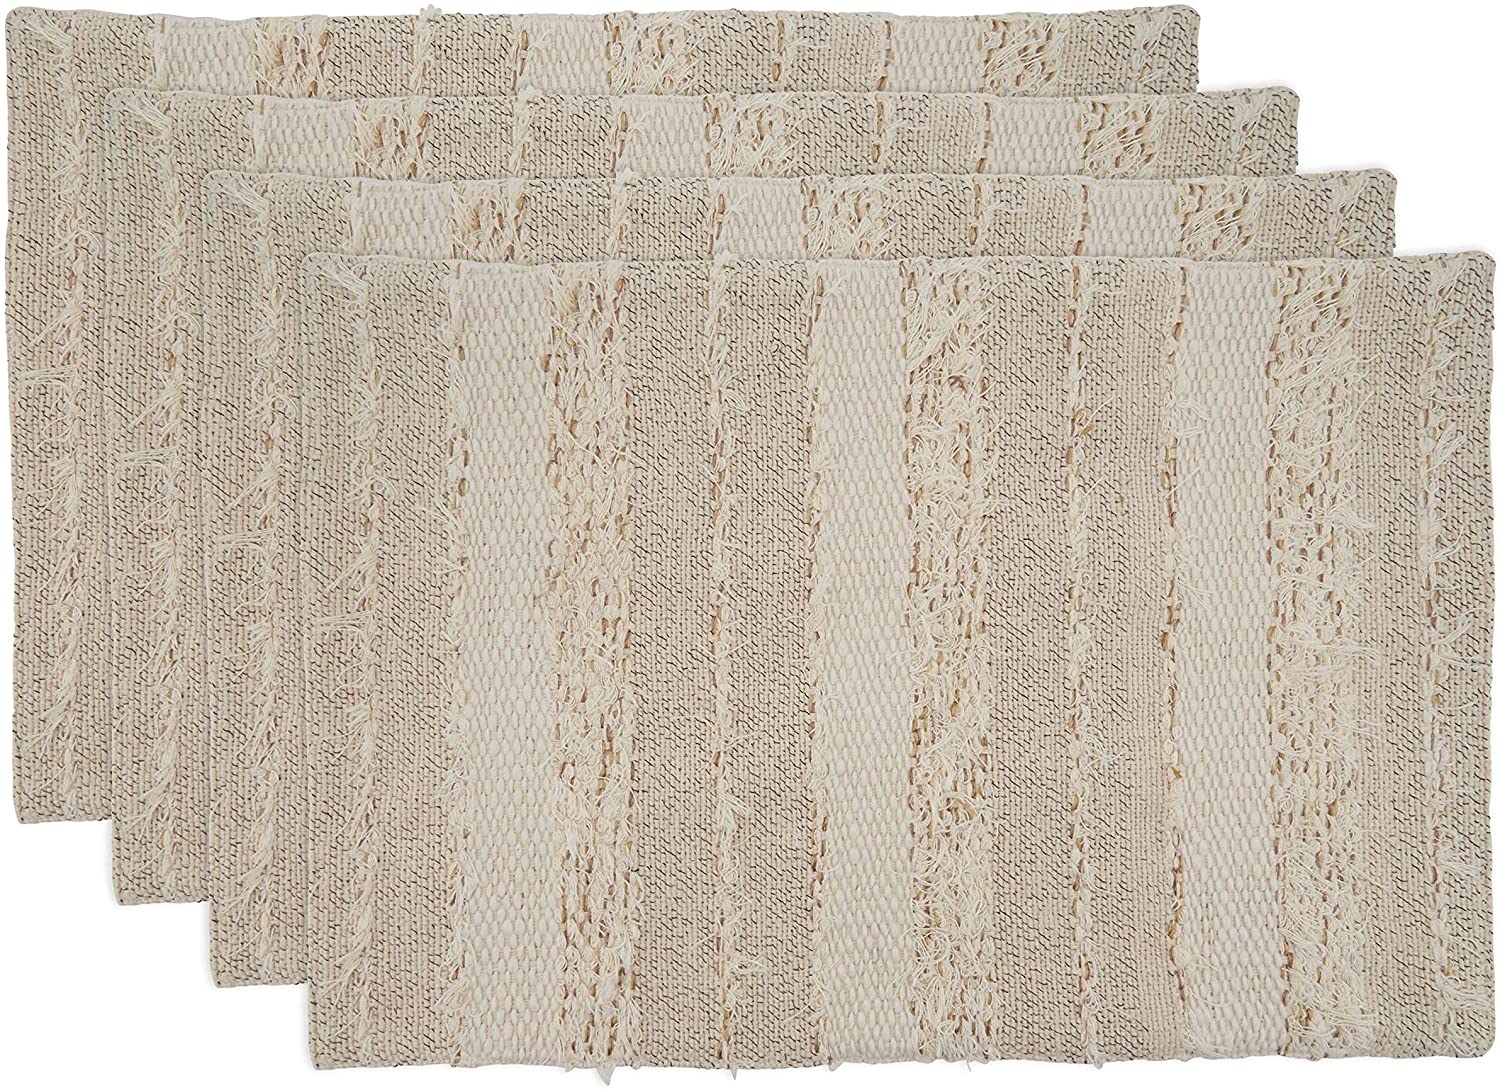 Unknown1 Placemats Fringe Stripe Design (Set 4) Off White Oblong Cotton